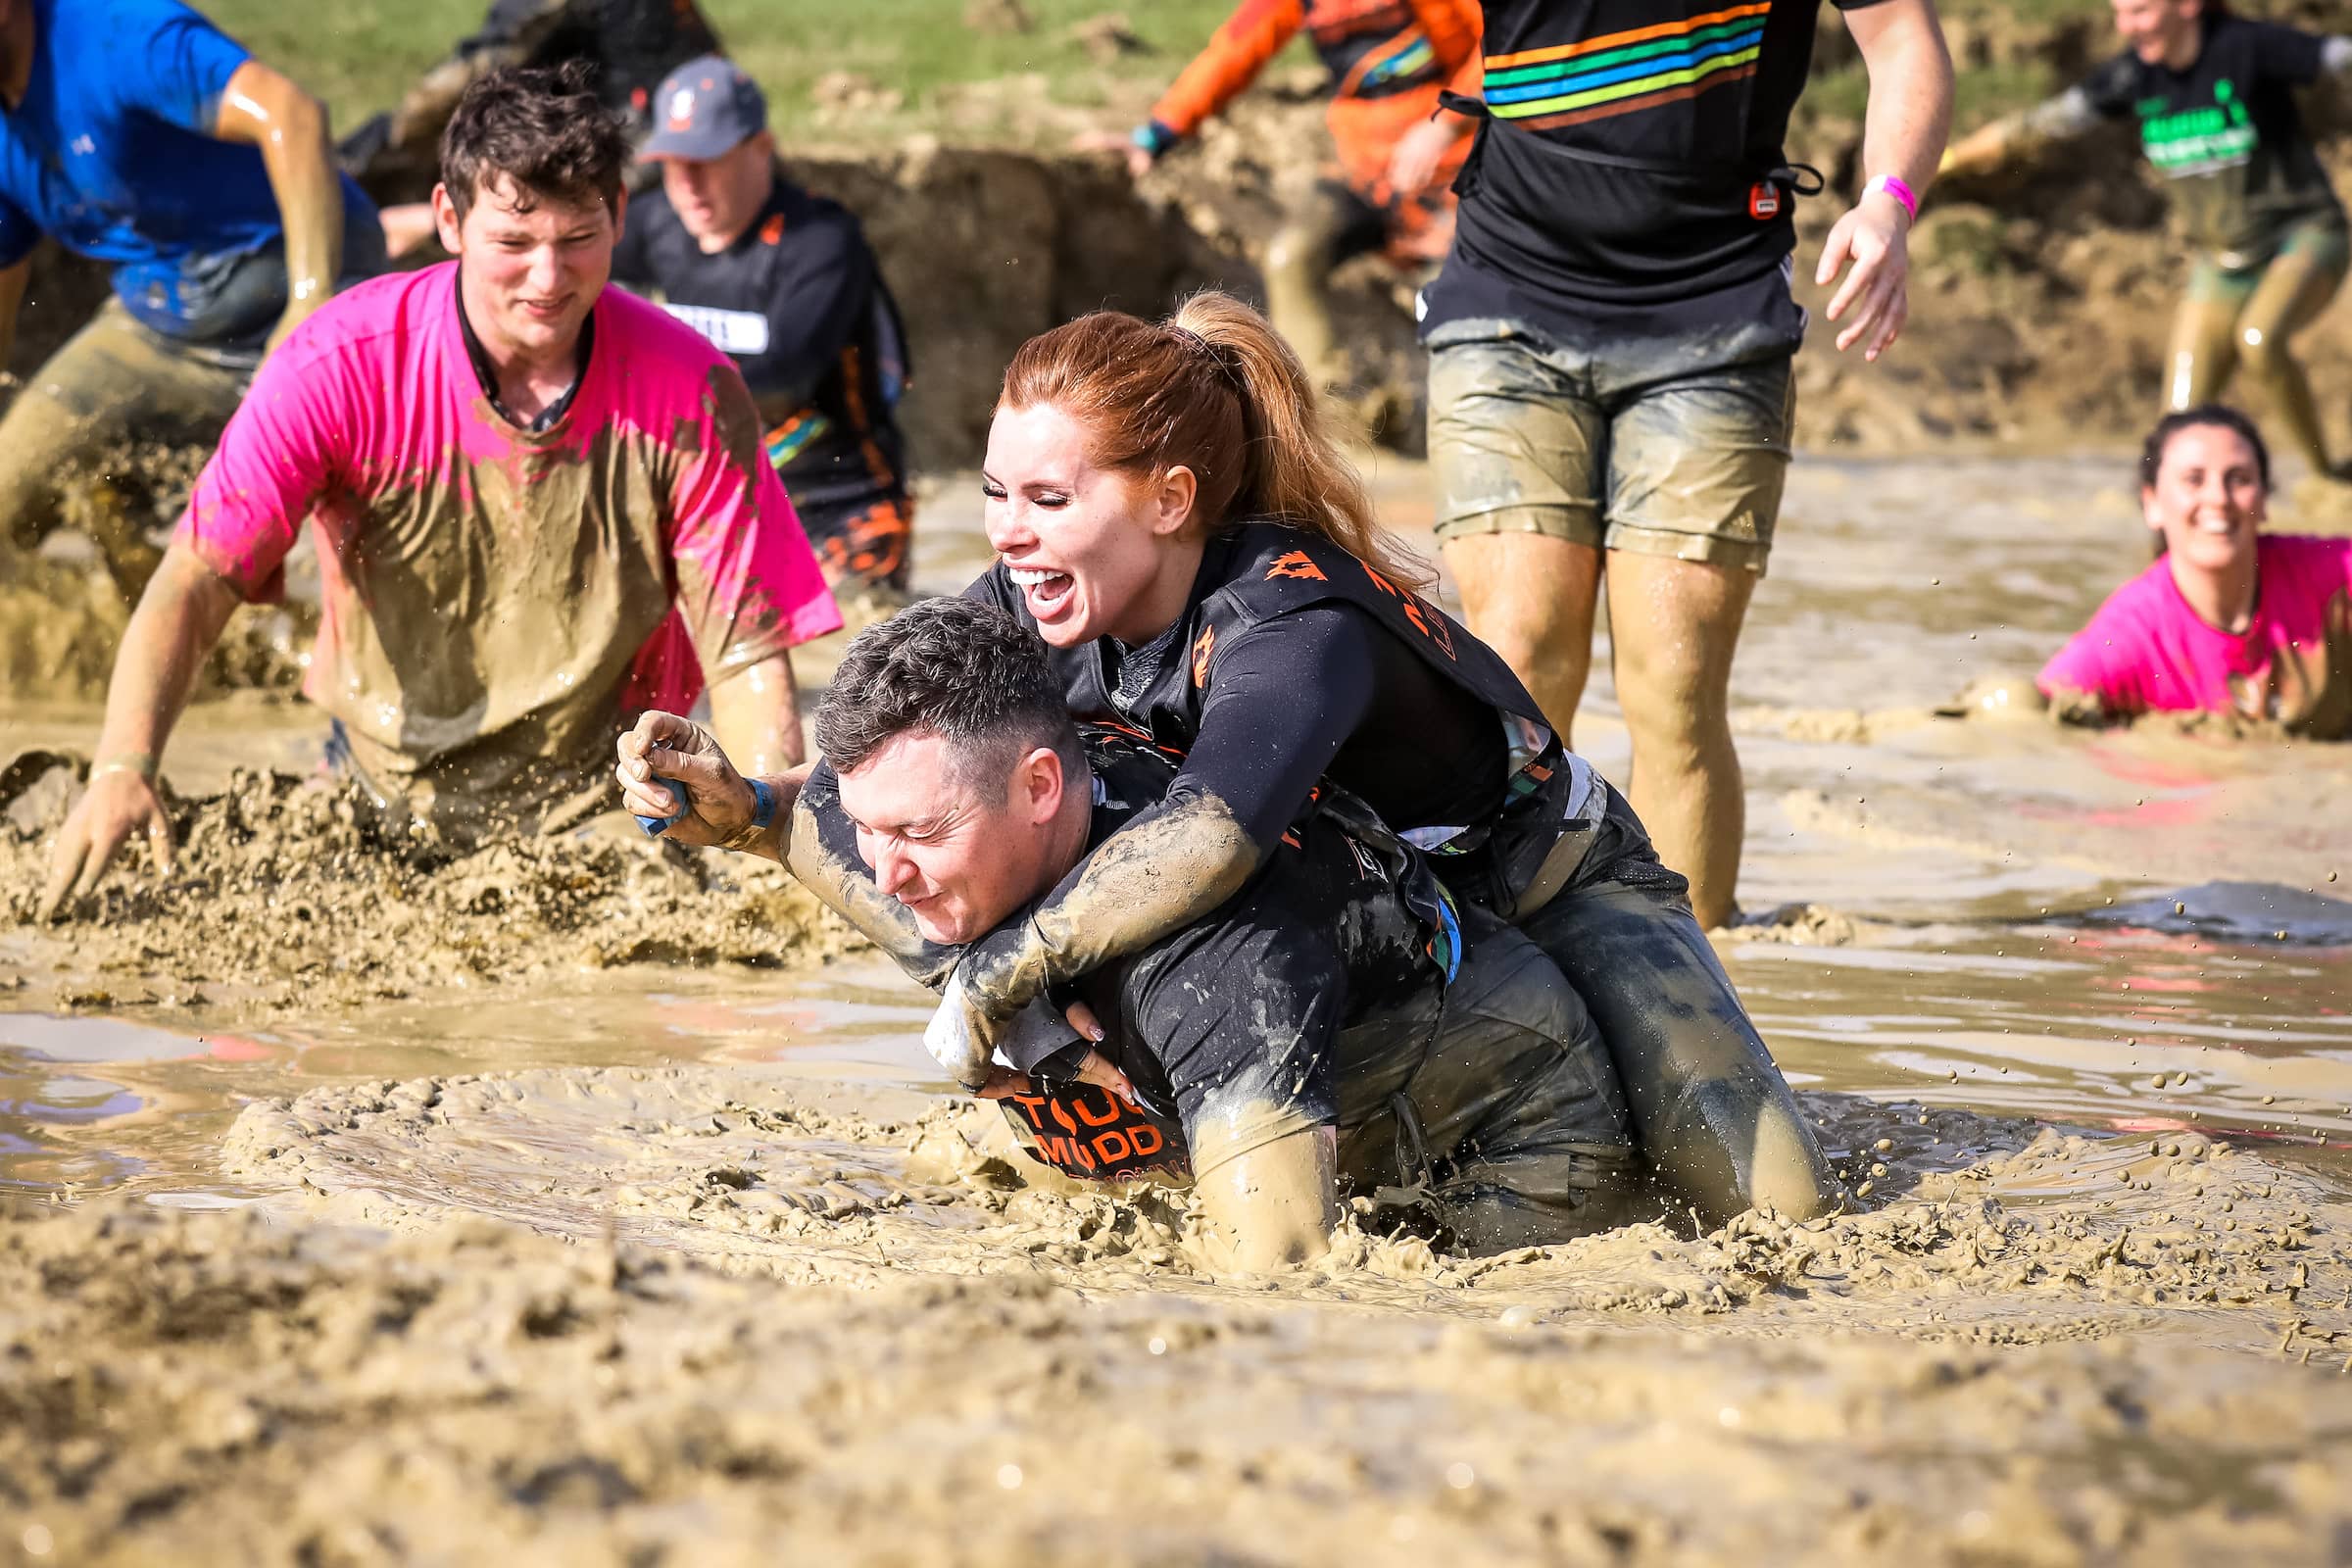 Tough mudder couple in mud